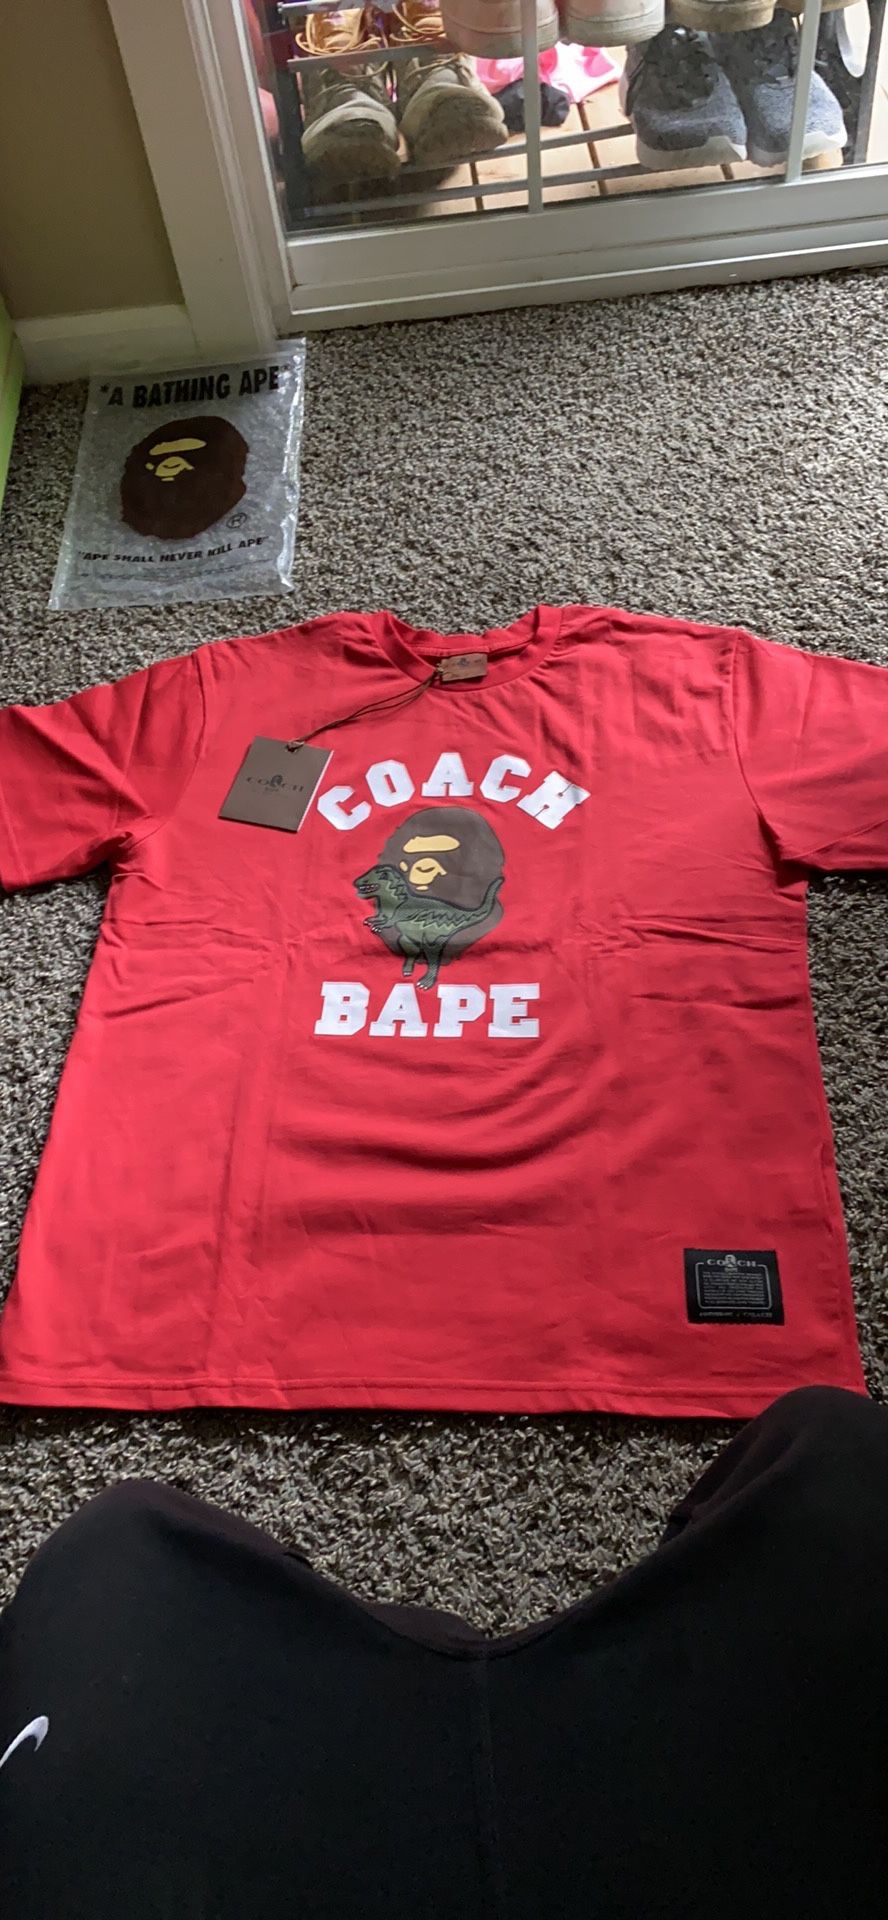 Bape x Coach Shirt